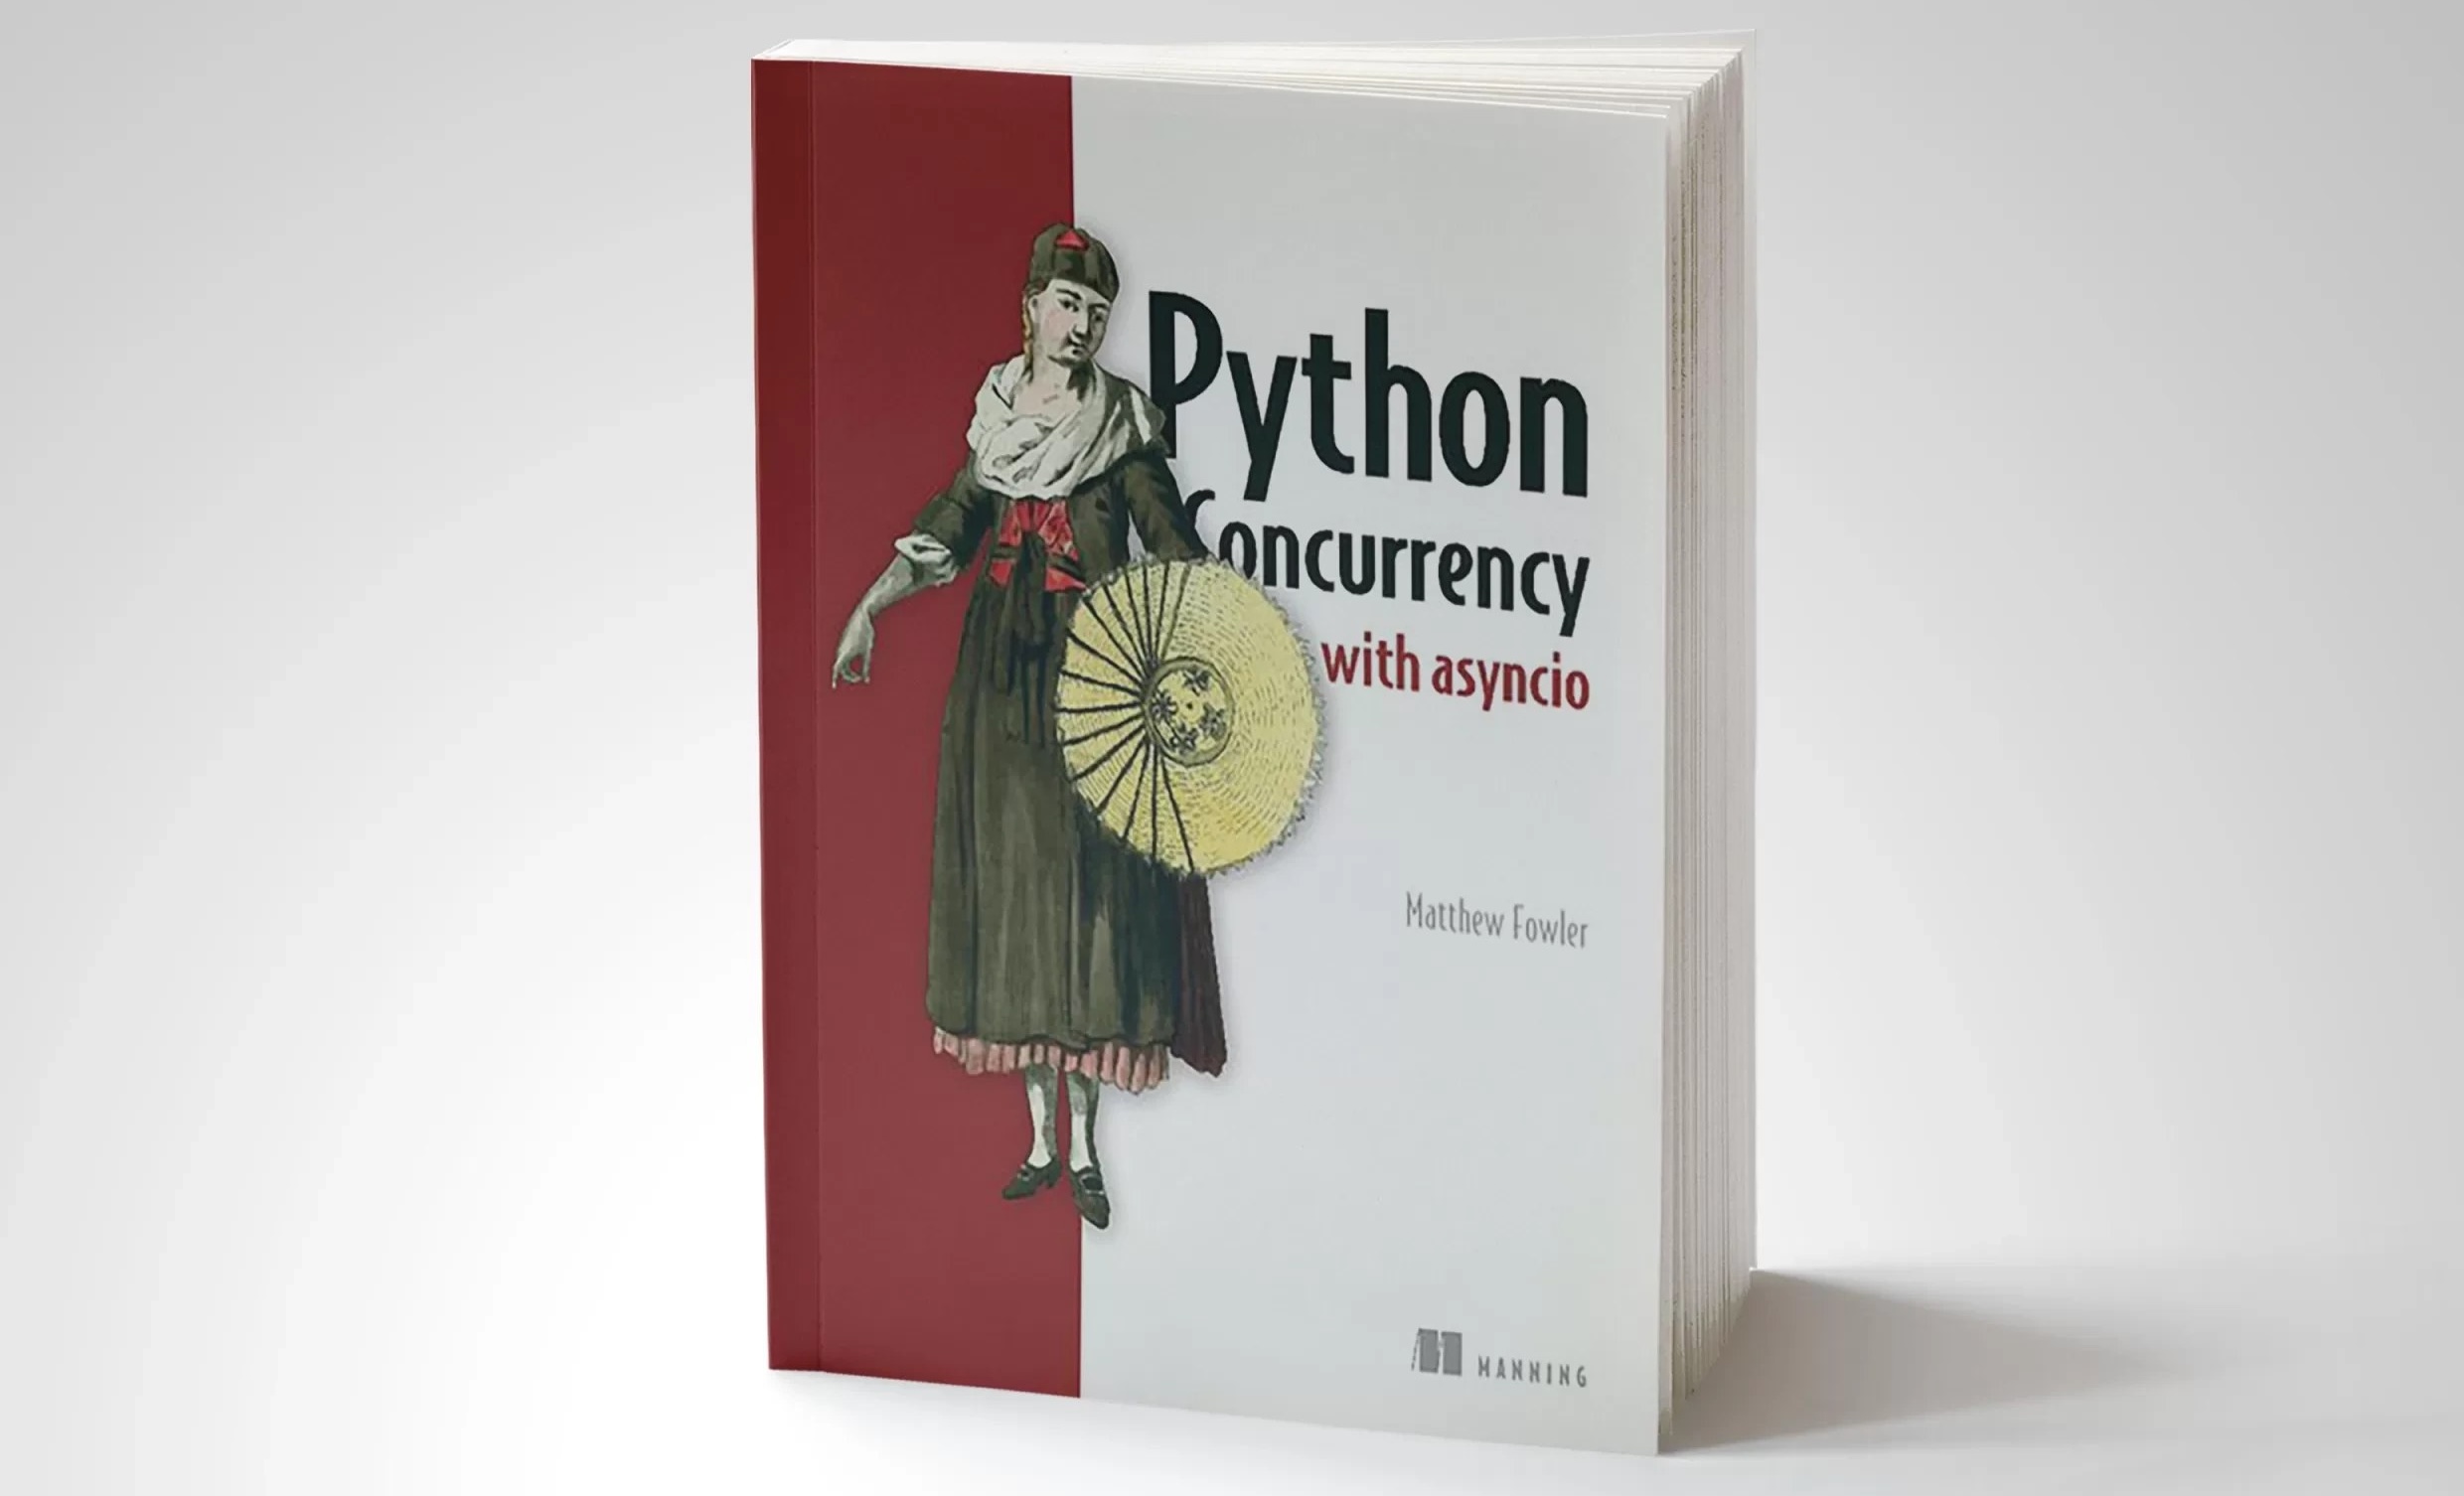 Впечатления от "Python Concurrency with asyncio" Мэтью Фаулера